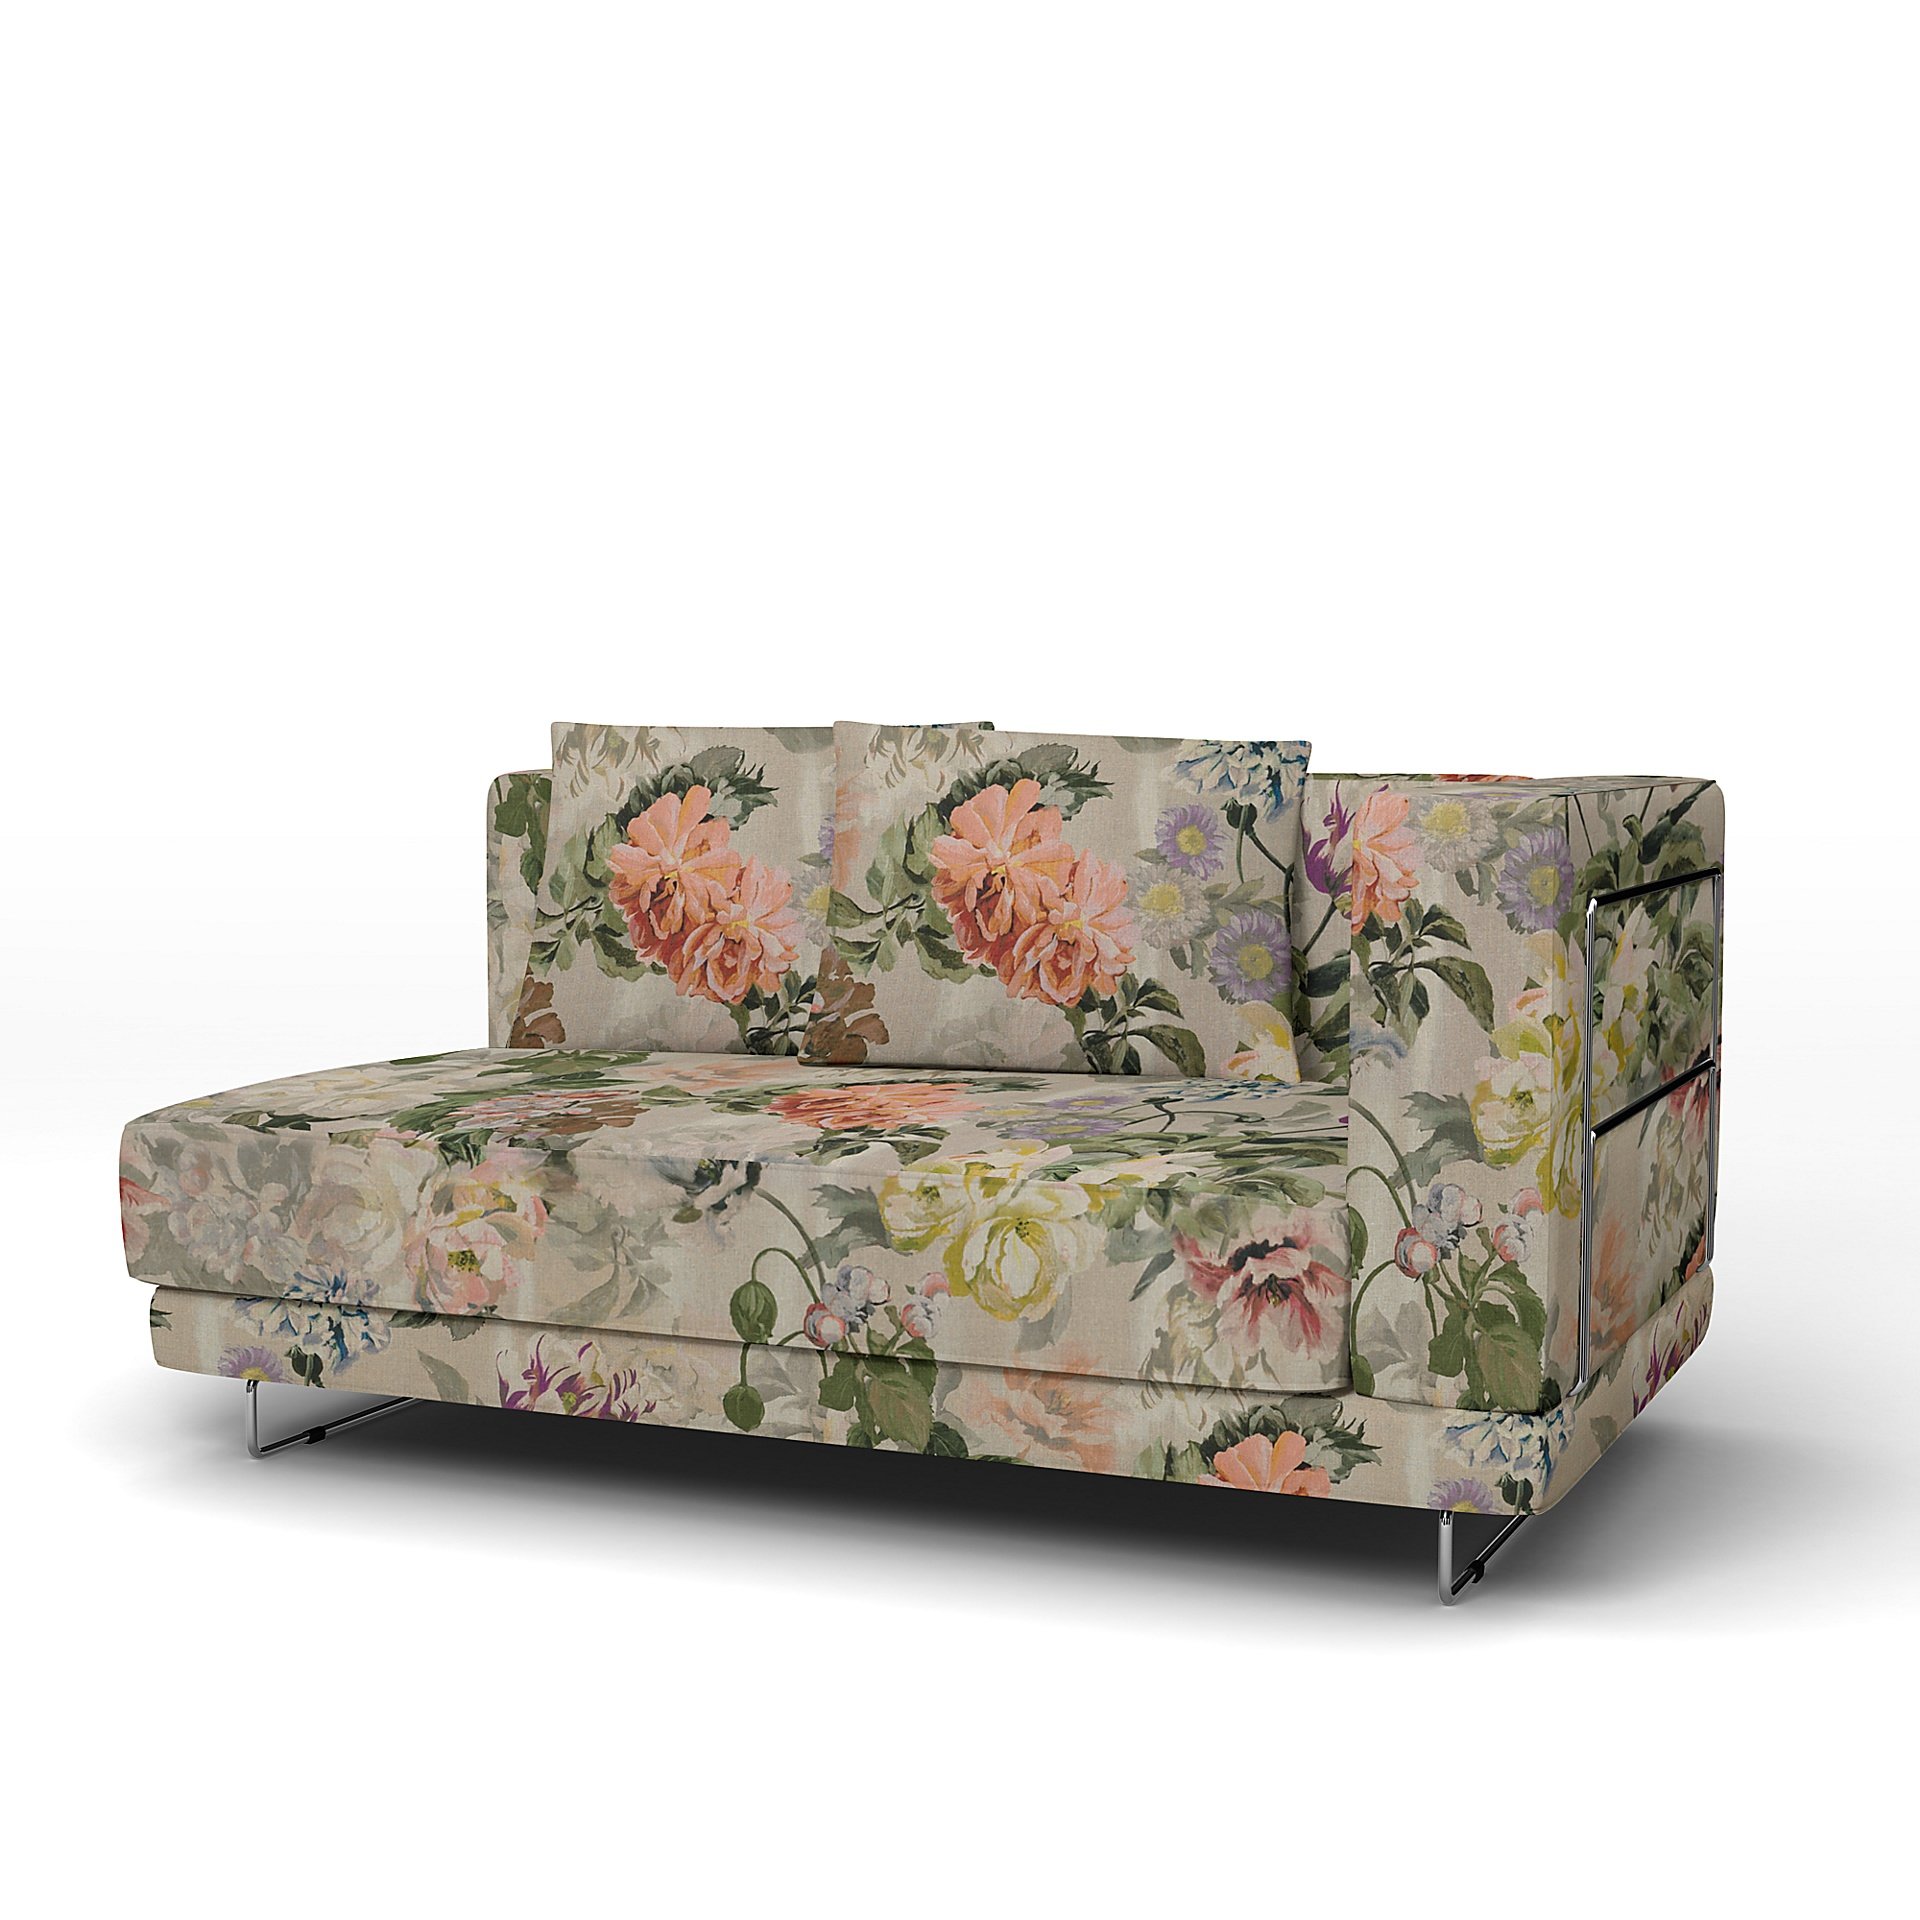 IKEA - Tylosand Sofa with Armrest Cover, Delft Flower - Tuberose, Linen - Bemz